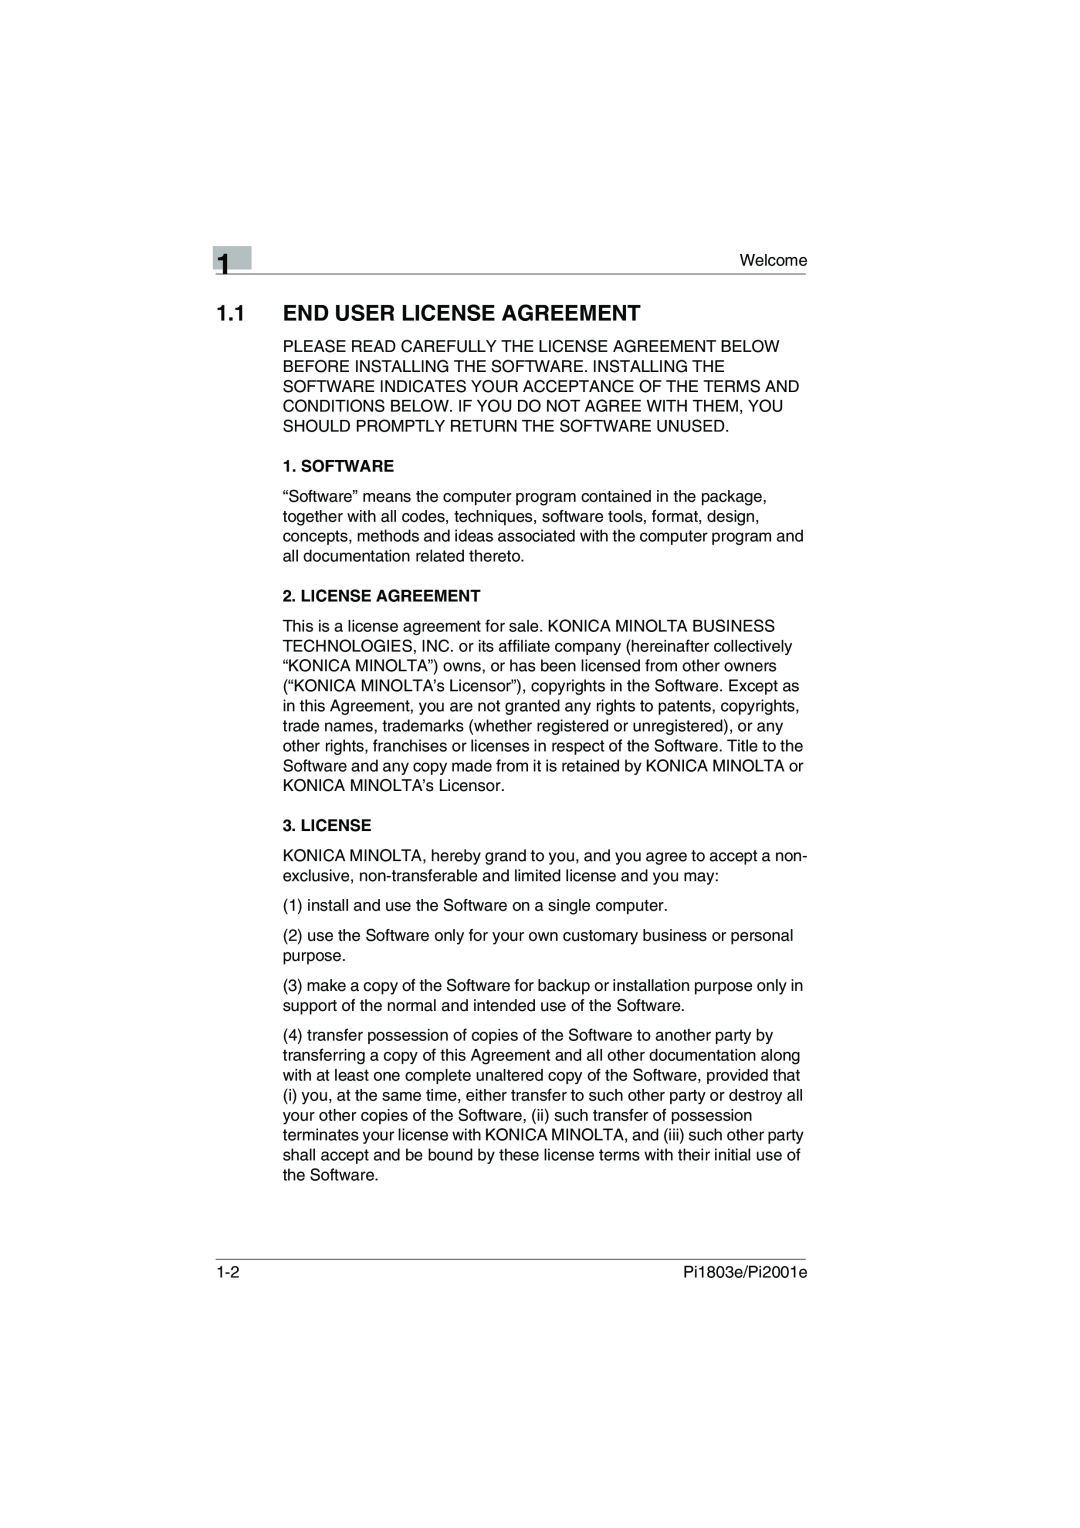 Konica Minolta Pi1803e, Pi2001e manual 1.1END USER LICENSE AGREEMENT, Software, License Agreement 